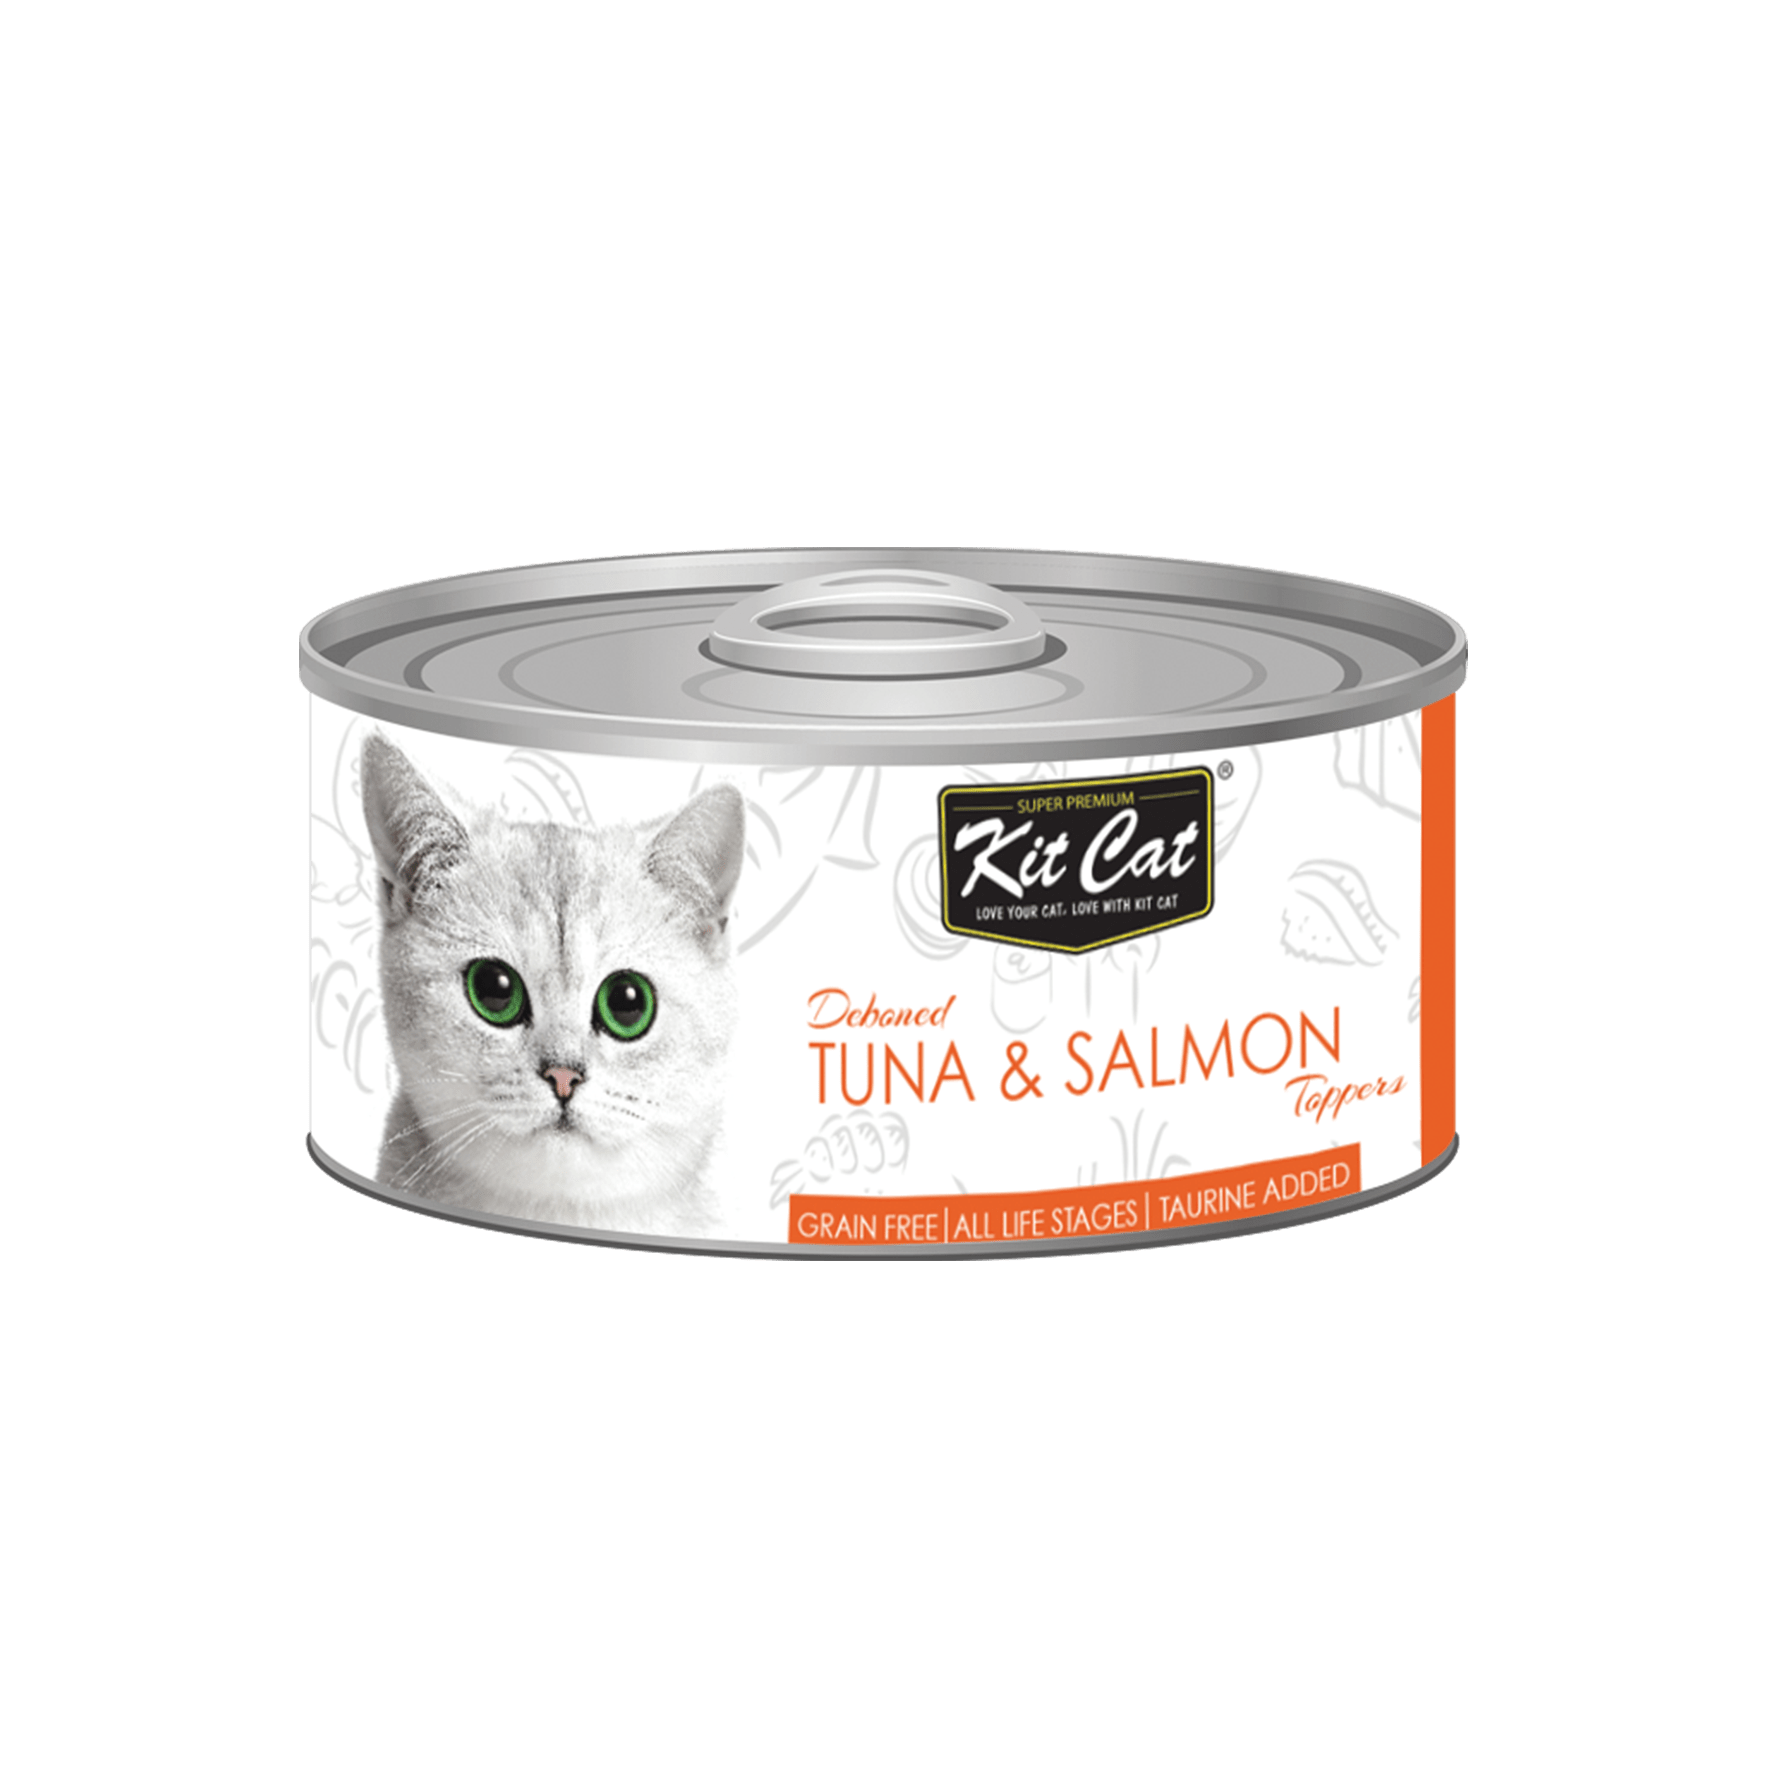 Kit Cat Canned Cat Food Deboned Tuna & Salmon Toppers aPetMart